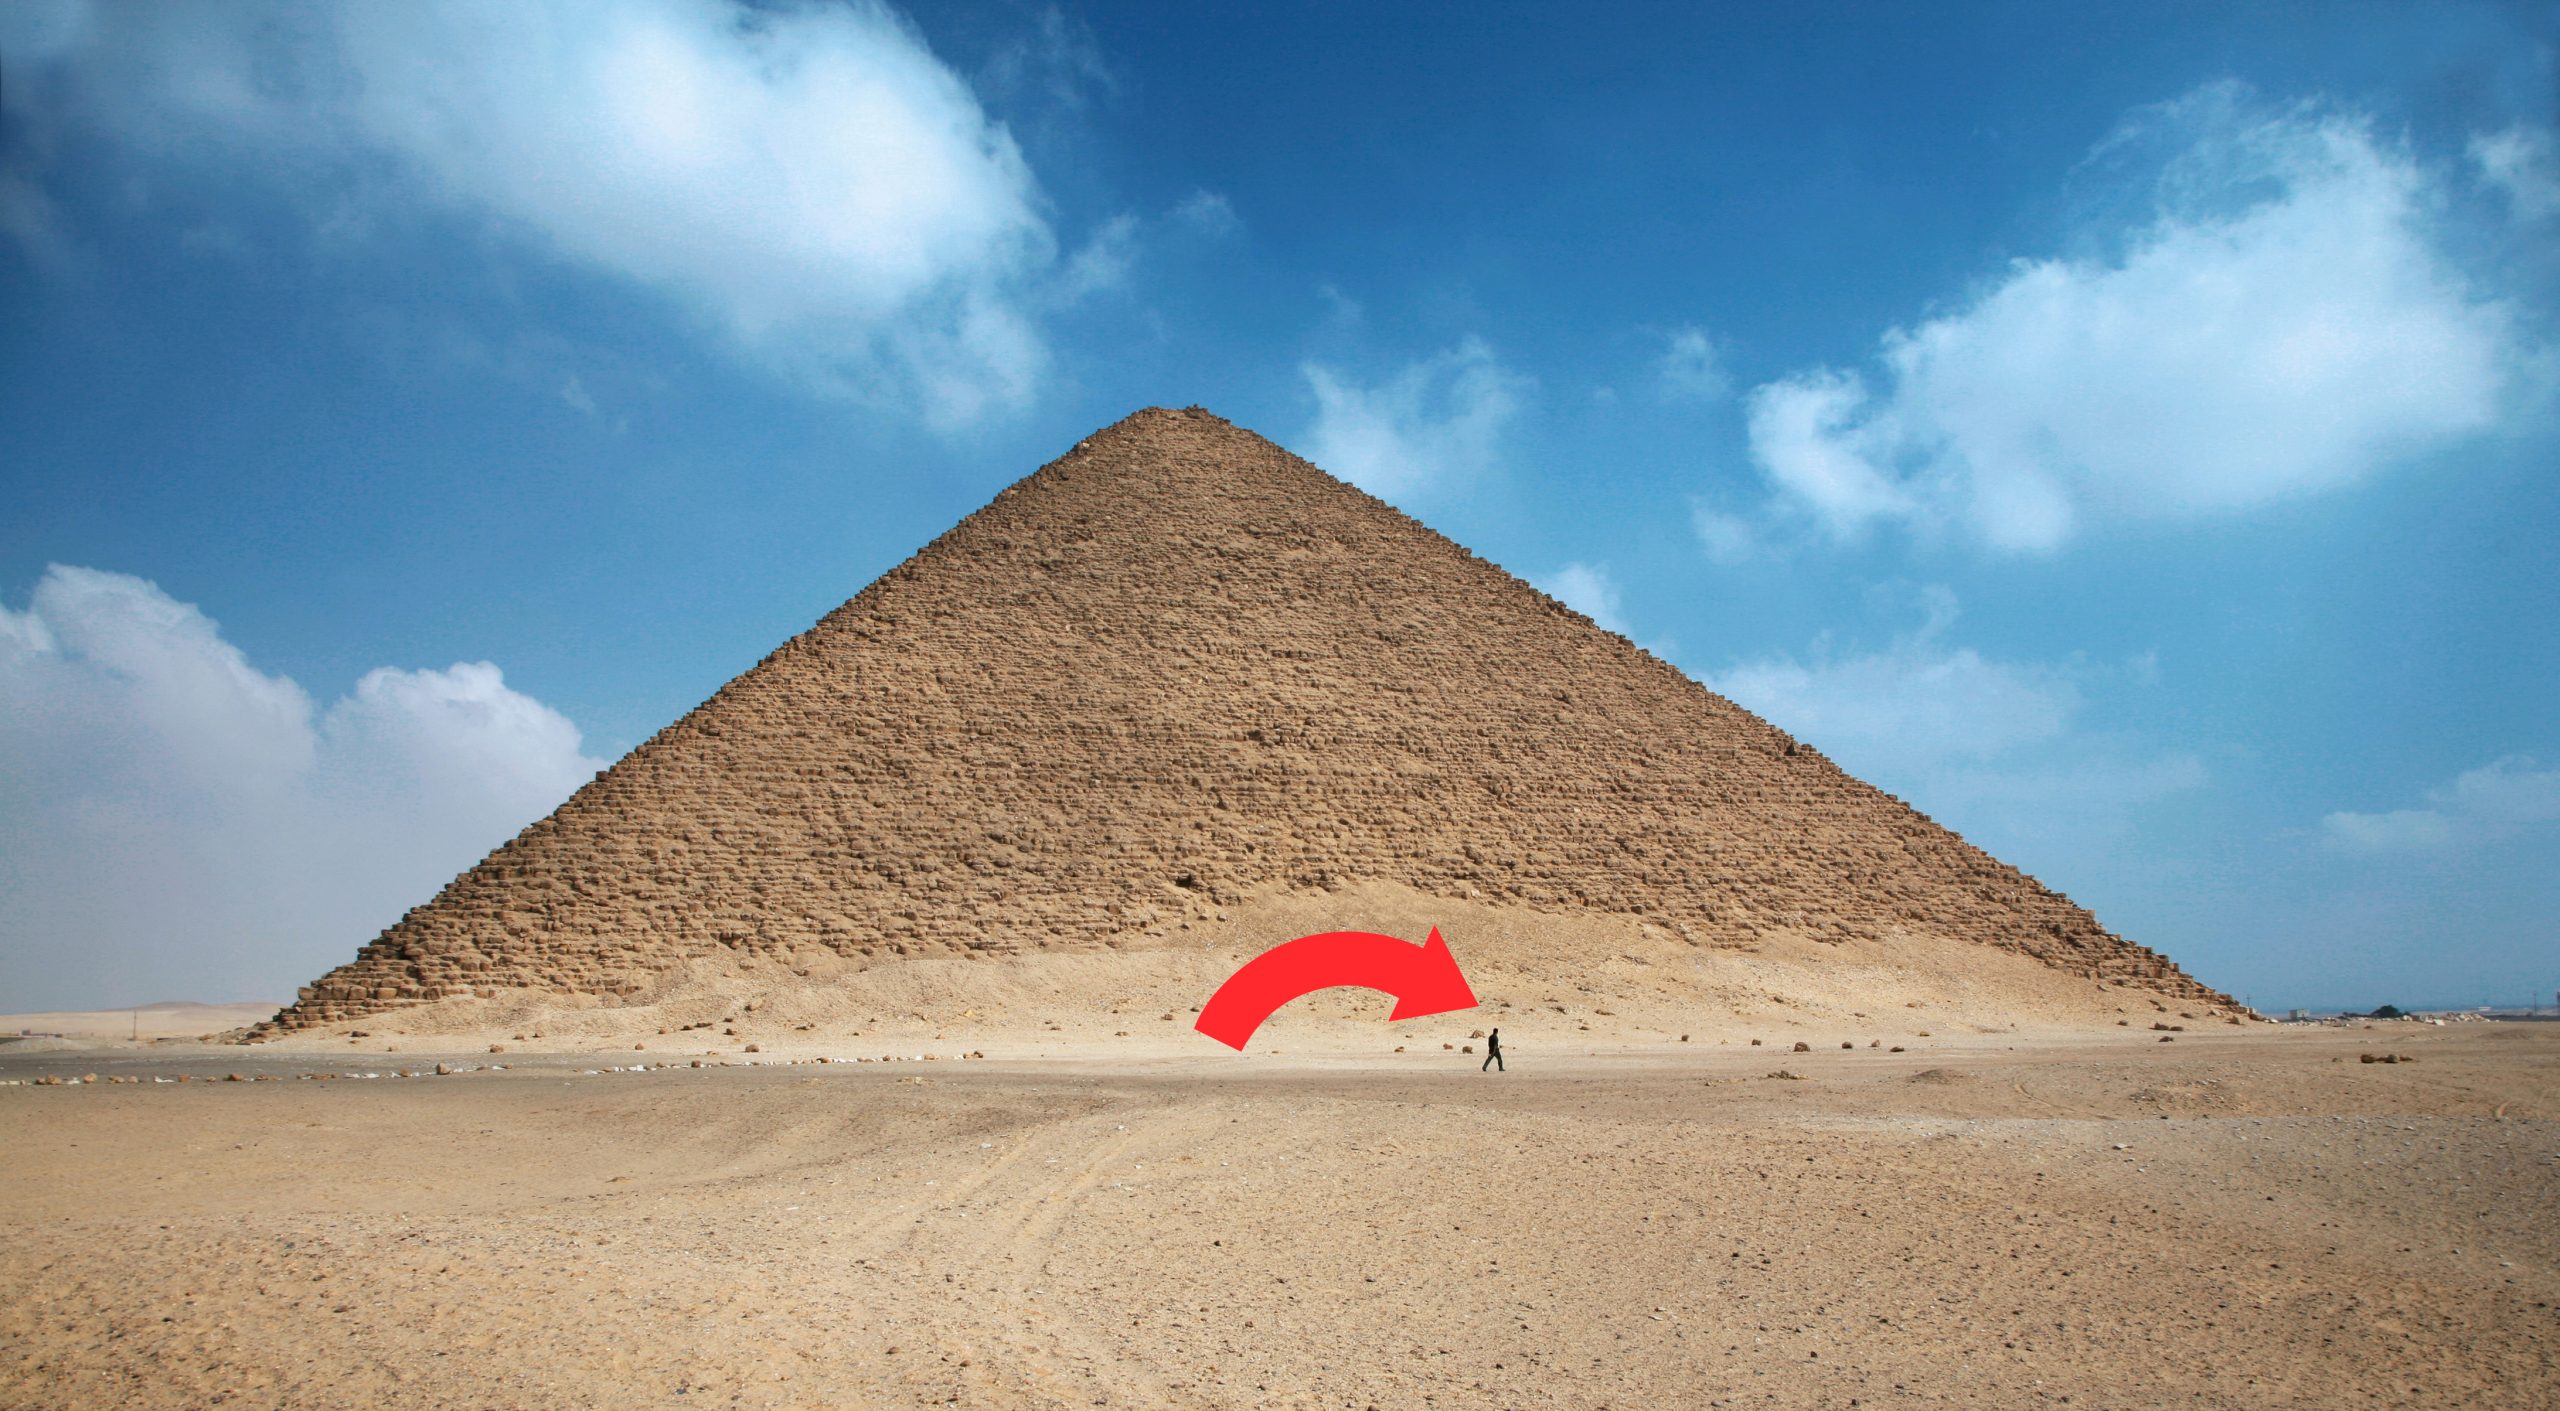 The Red Pyramid of Sneferu. YAYIMAGES/Curiosmos.